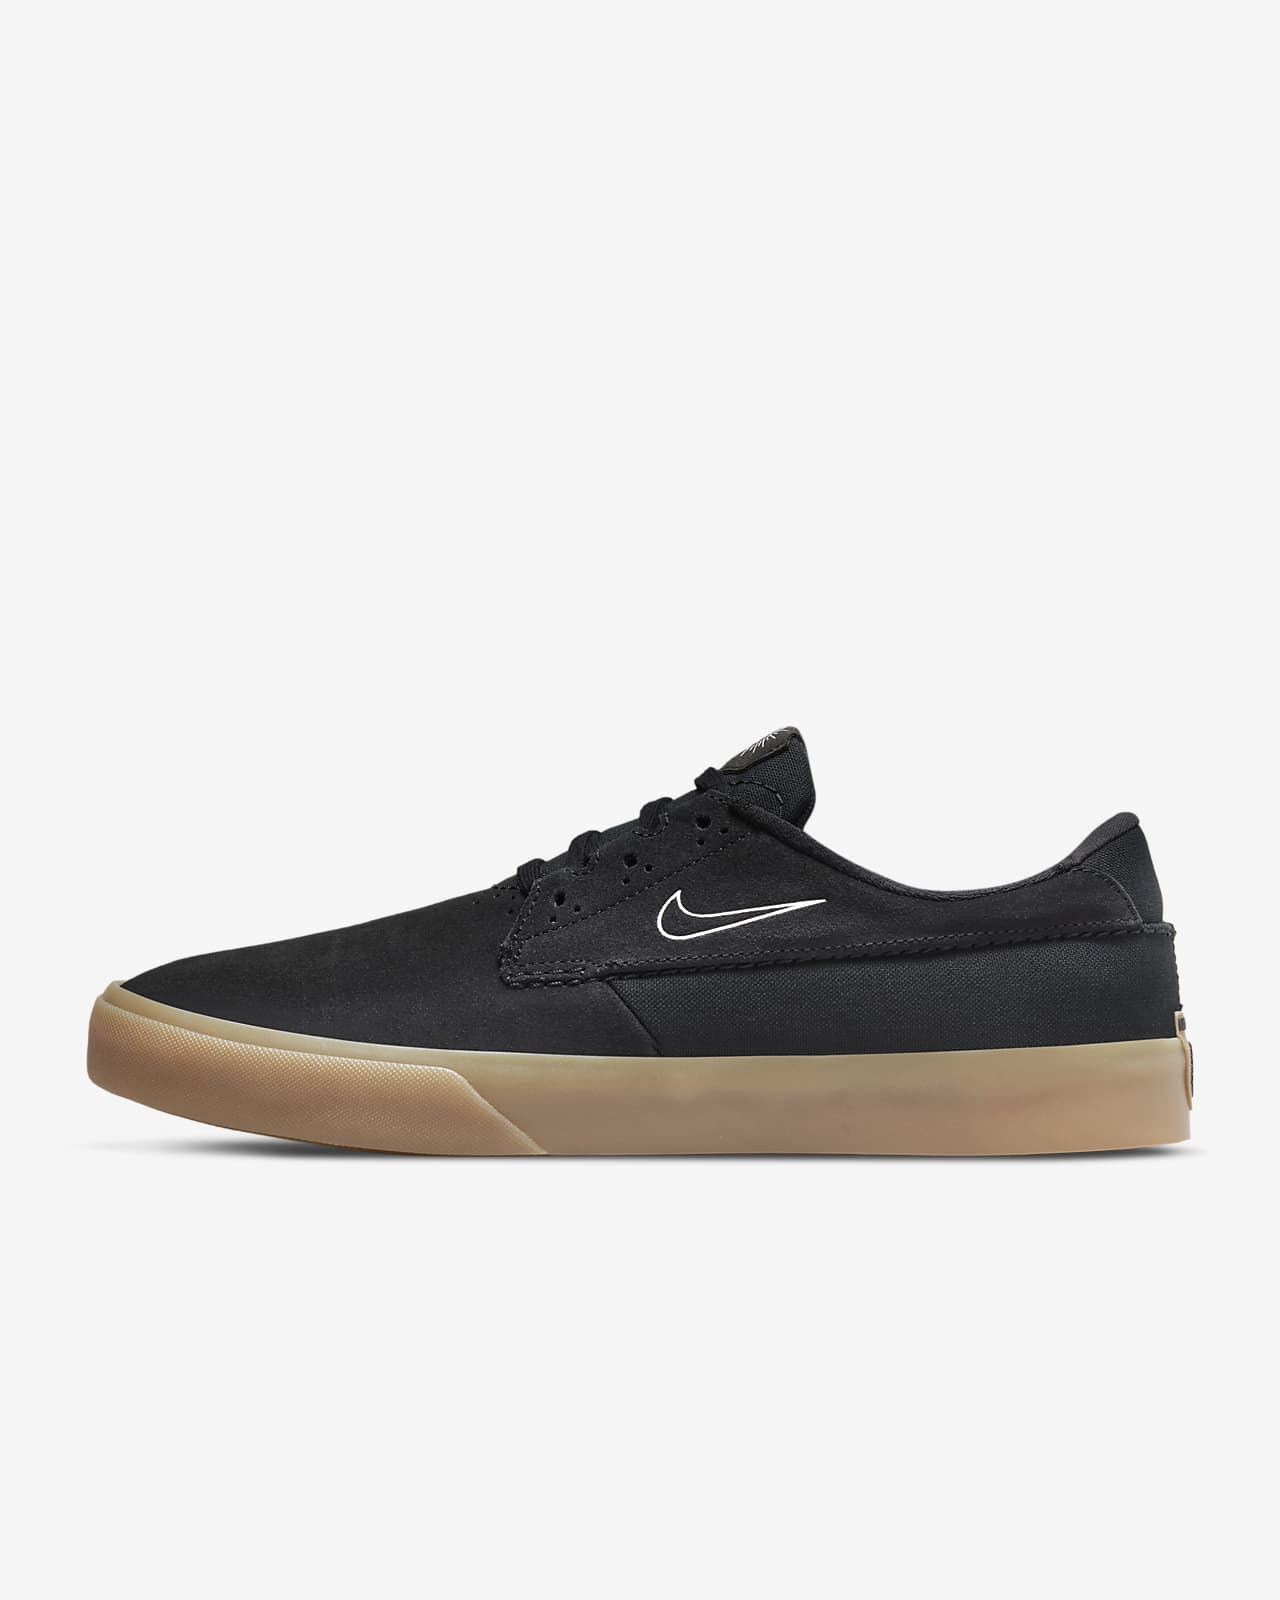 nike sb leather black | Nike SB Shane Skate Shoes